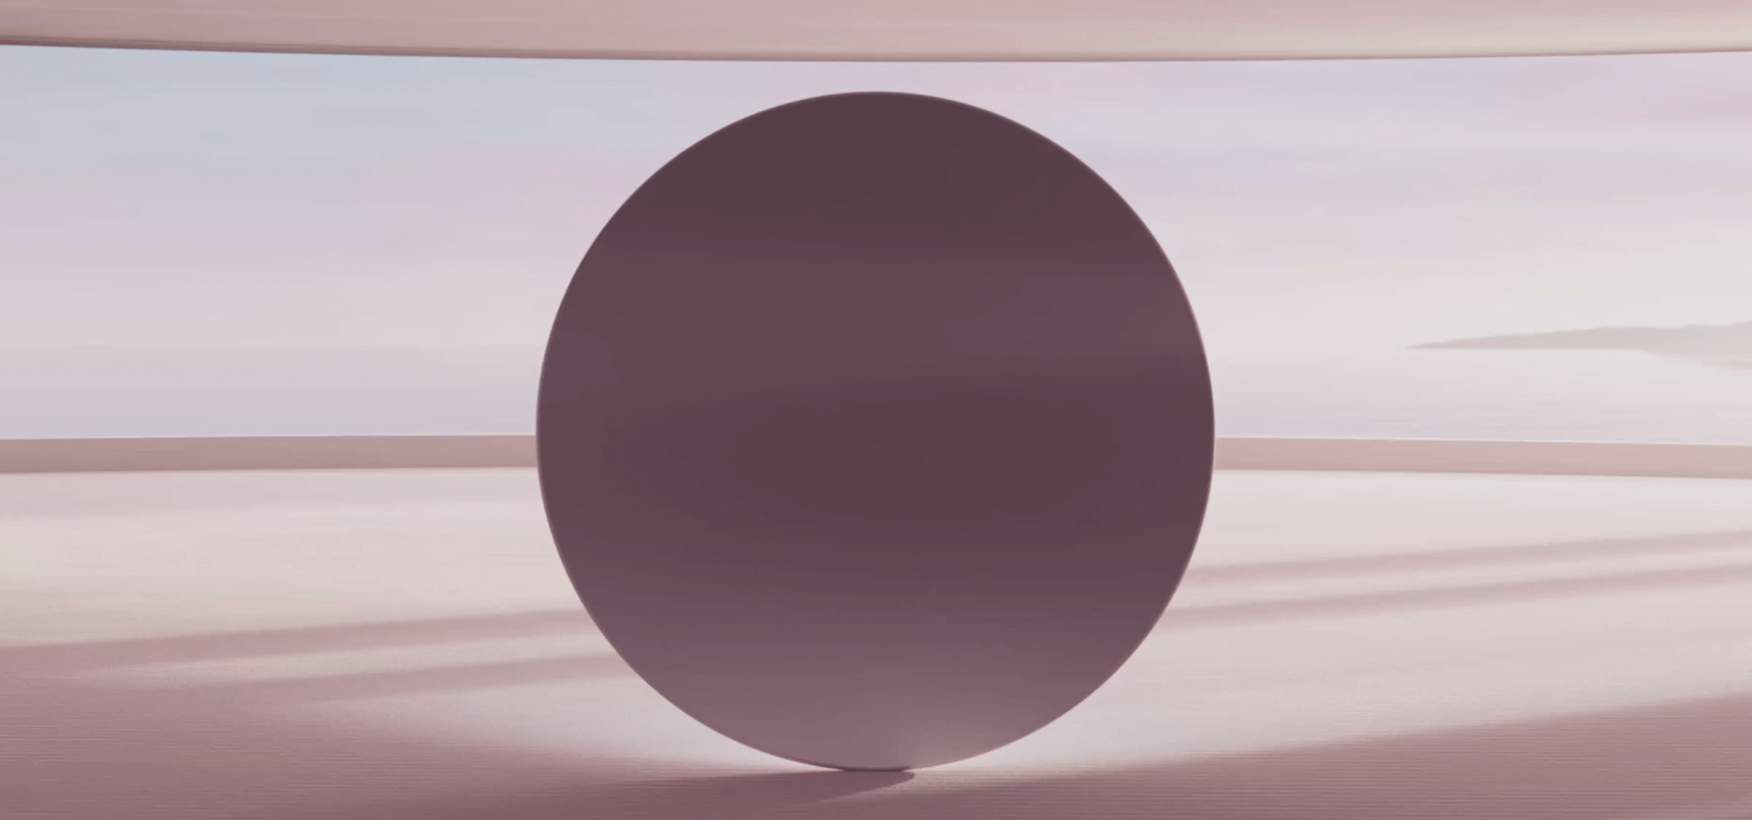 Sphere - Digital Artpiece, inspired by the Audi grandsphere concept.